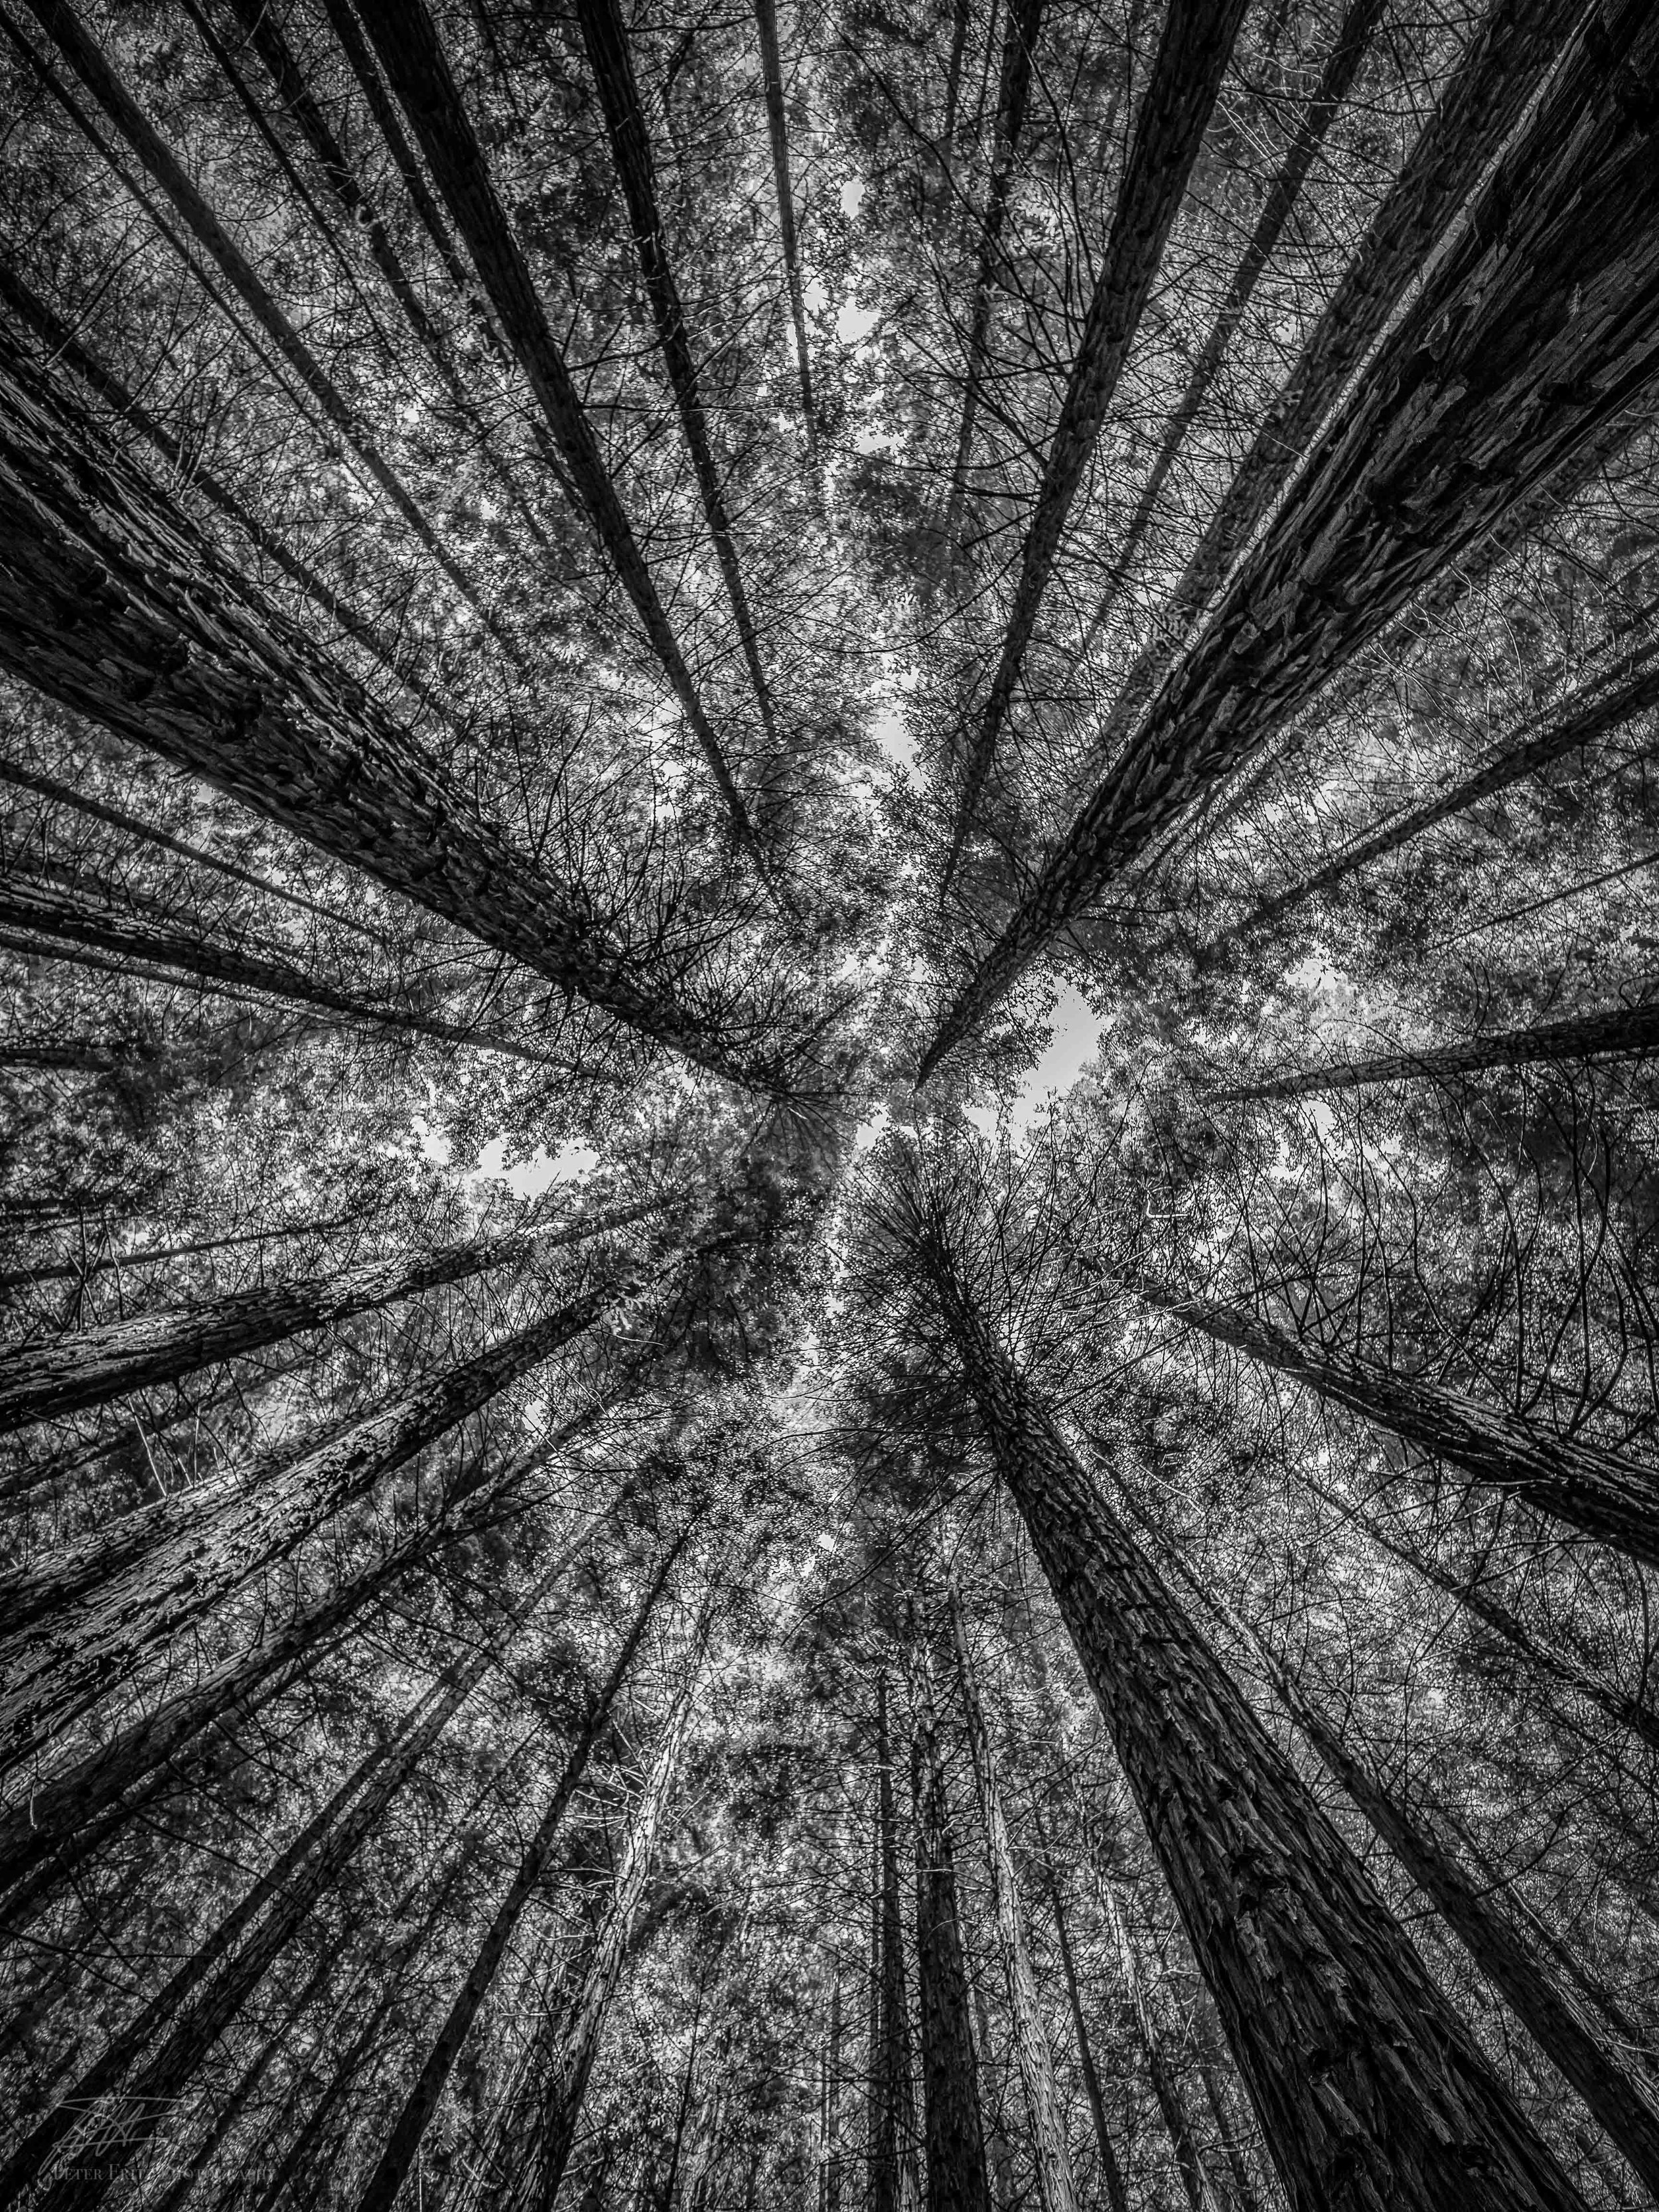 Redwoods up bnw 4x3 web.jpg